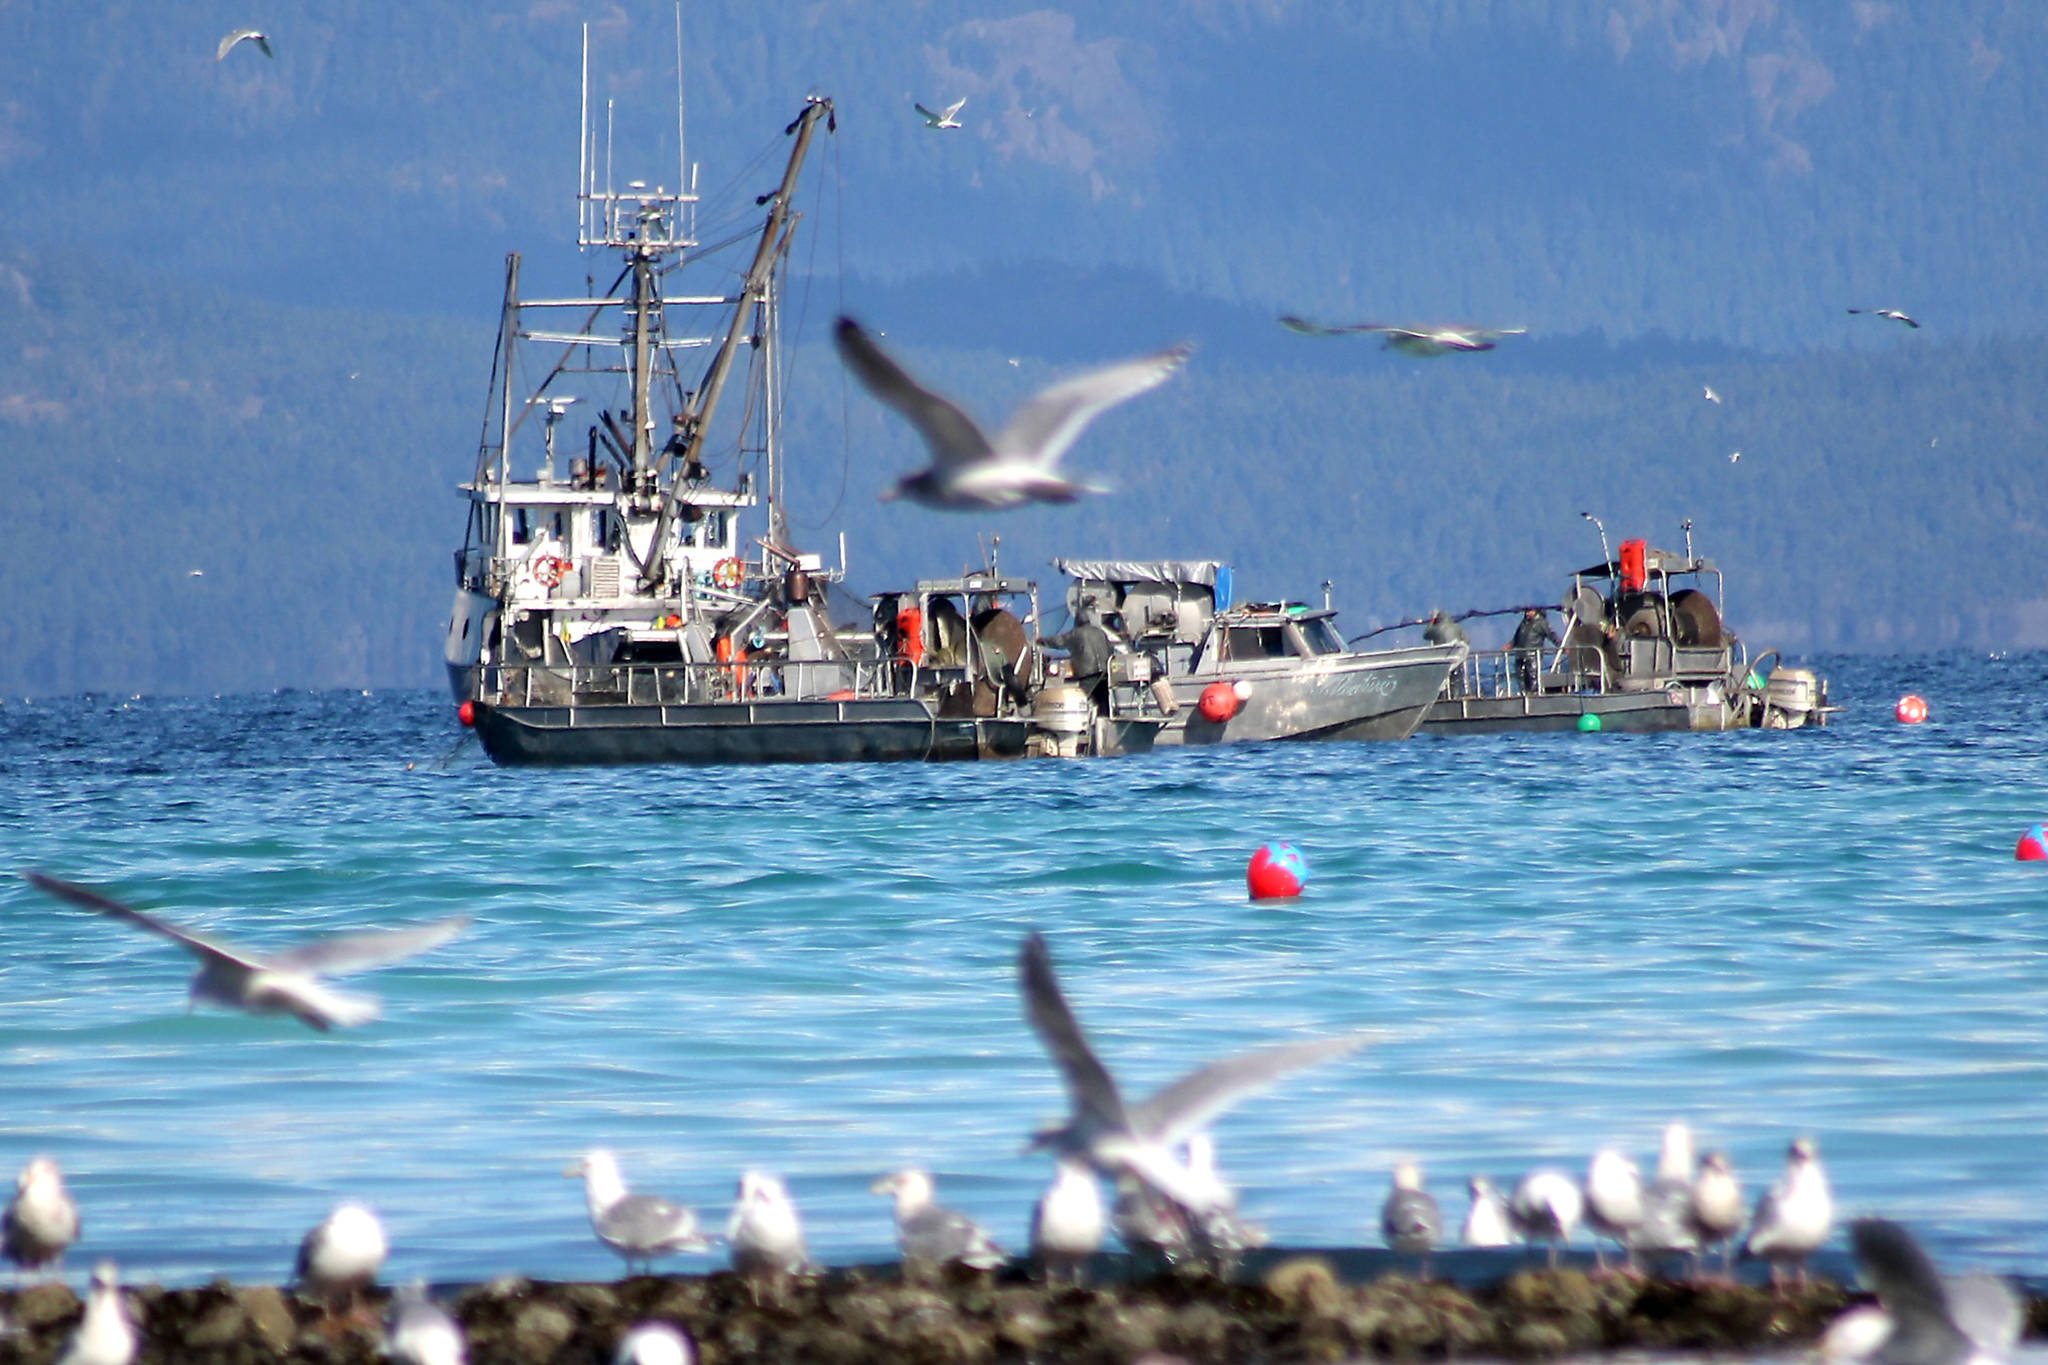 File:Victoria, B.C., Canada, Vancouver Island - fishing, shooting